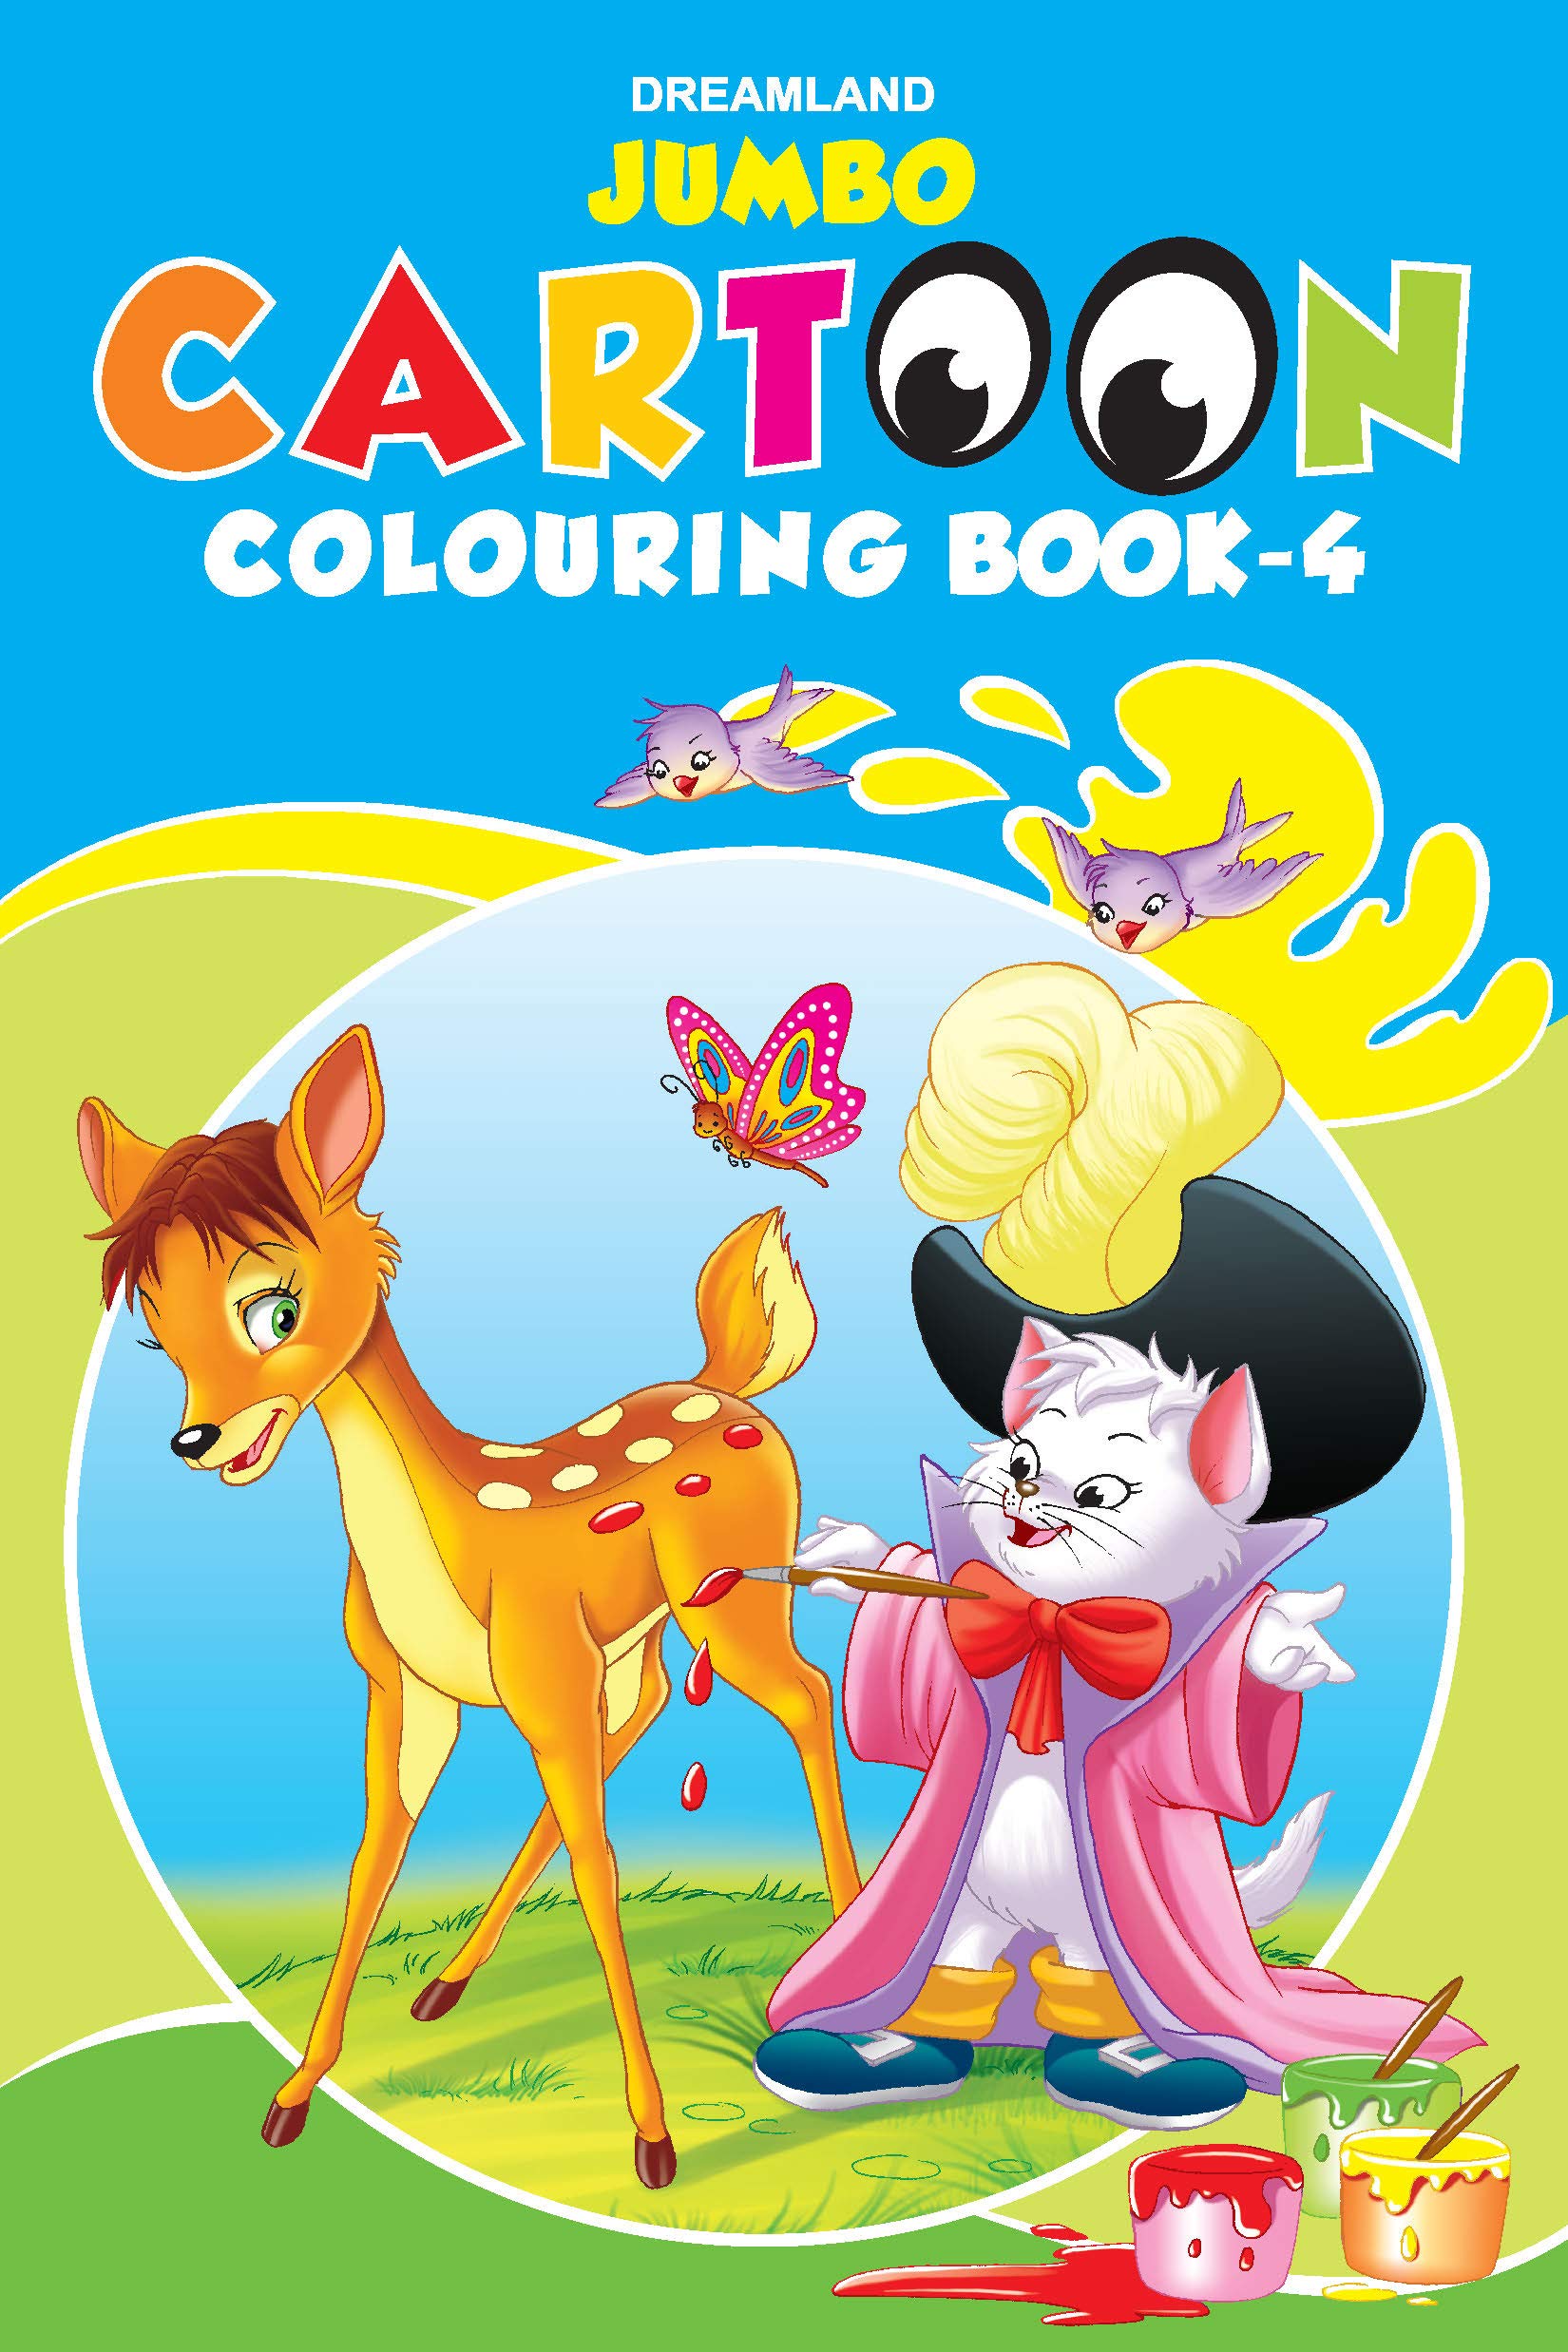 Jumbo Cartoon Colouring Book - 4